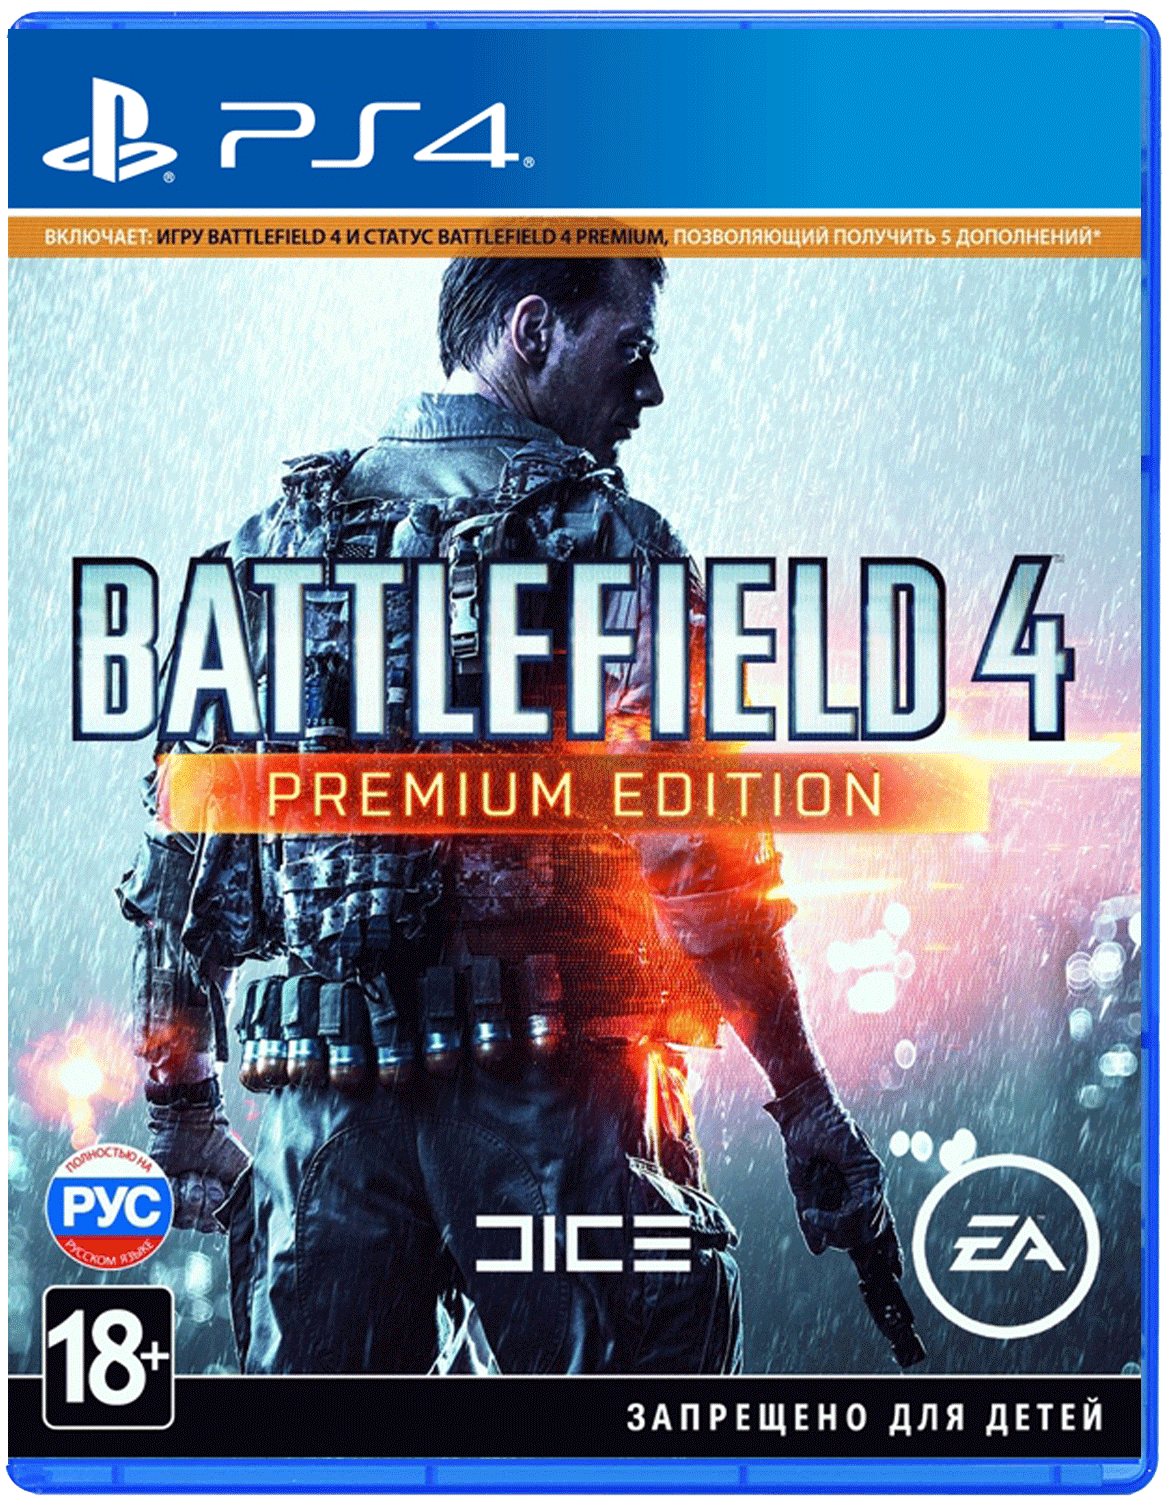 Battlefield 4 Premium Edition ps4. Battlefield 4 ps4 диск. Диск для ps4 Battlefield 4 Premium Edition. Battlefield ps4 игры на ps4.